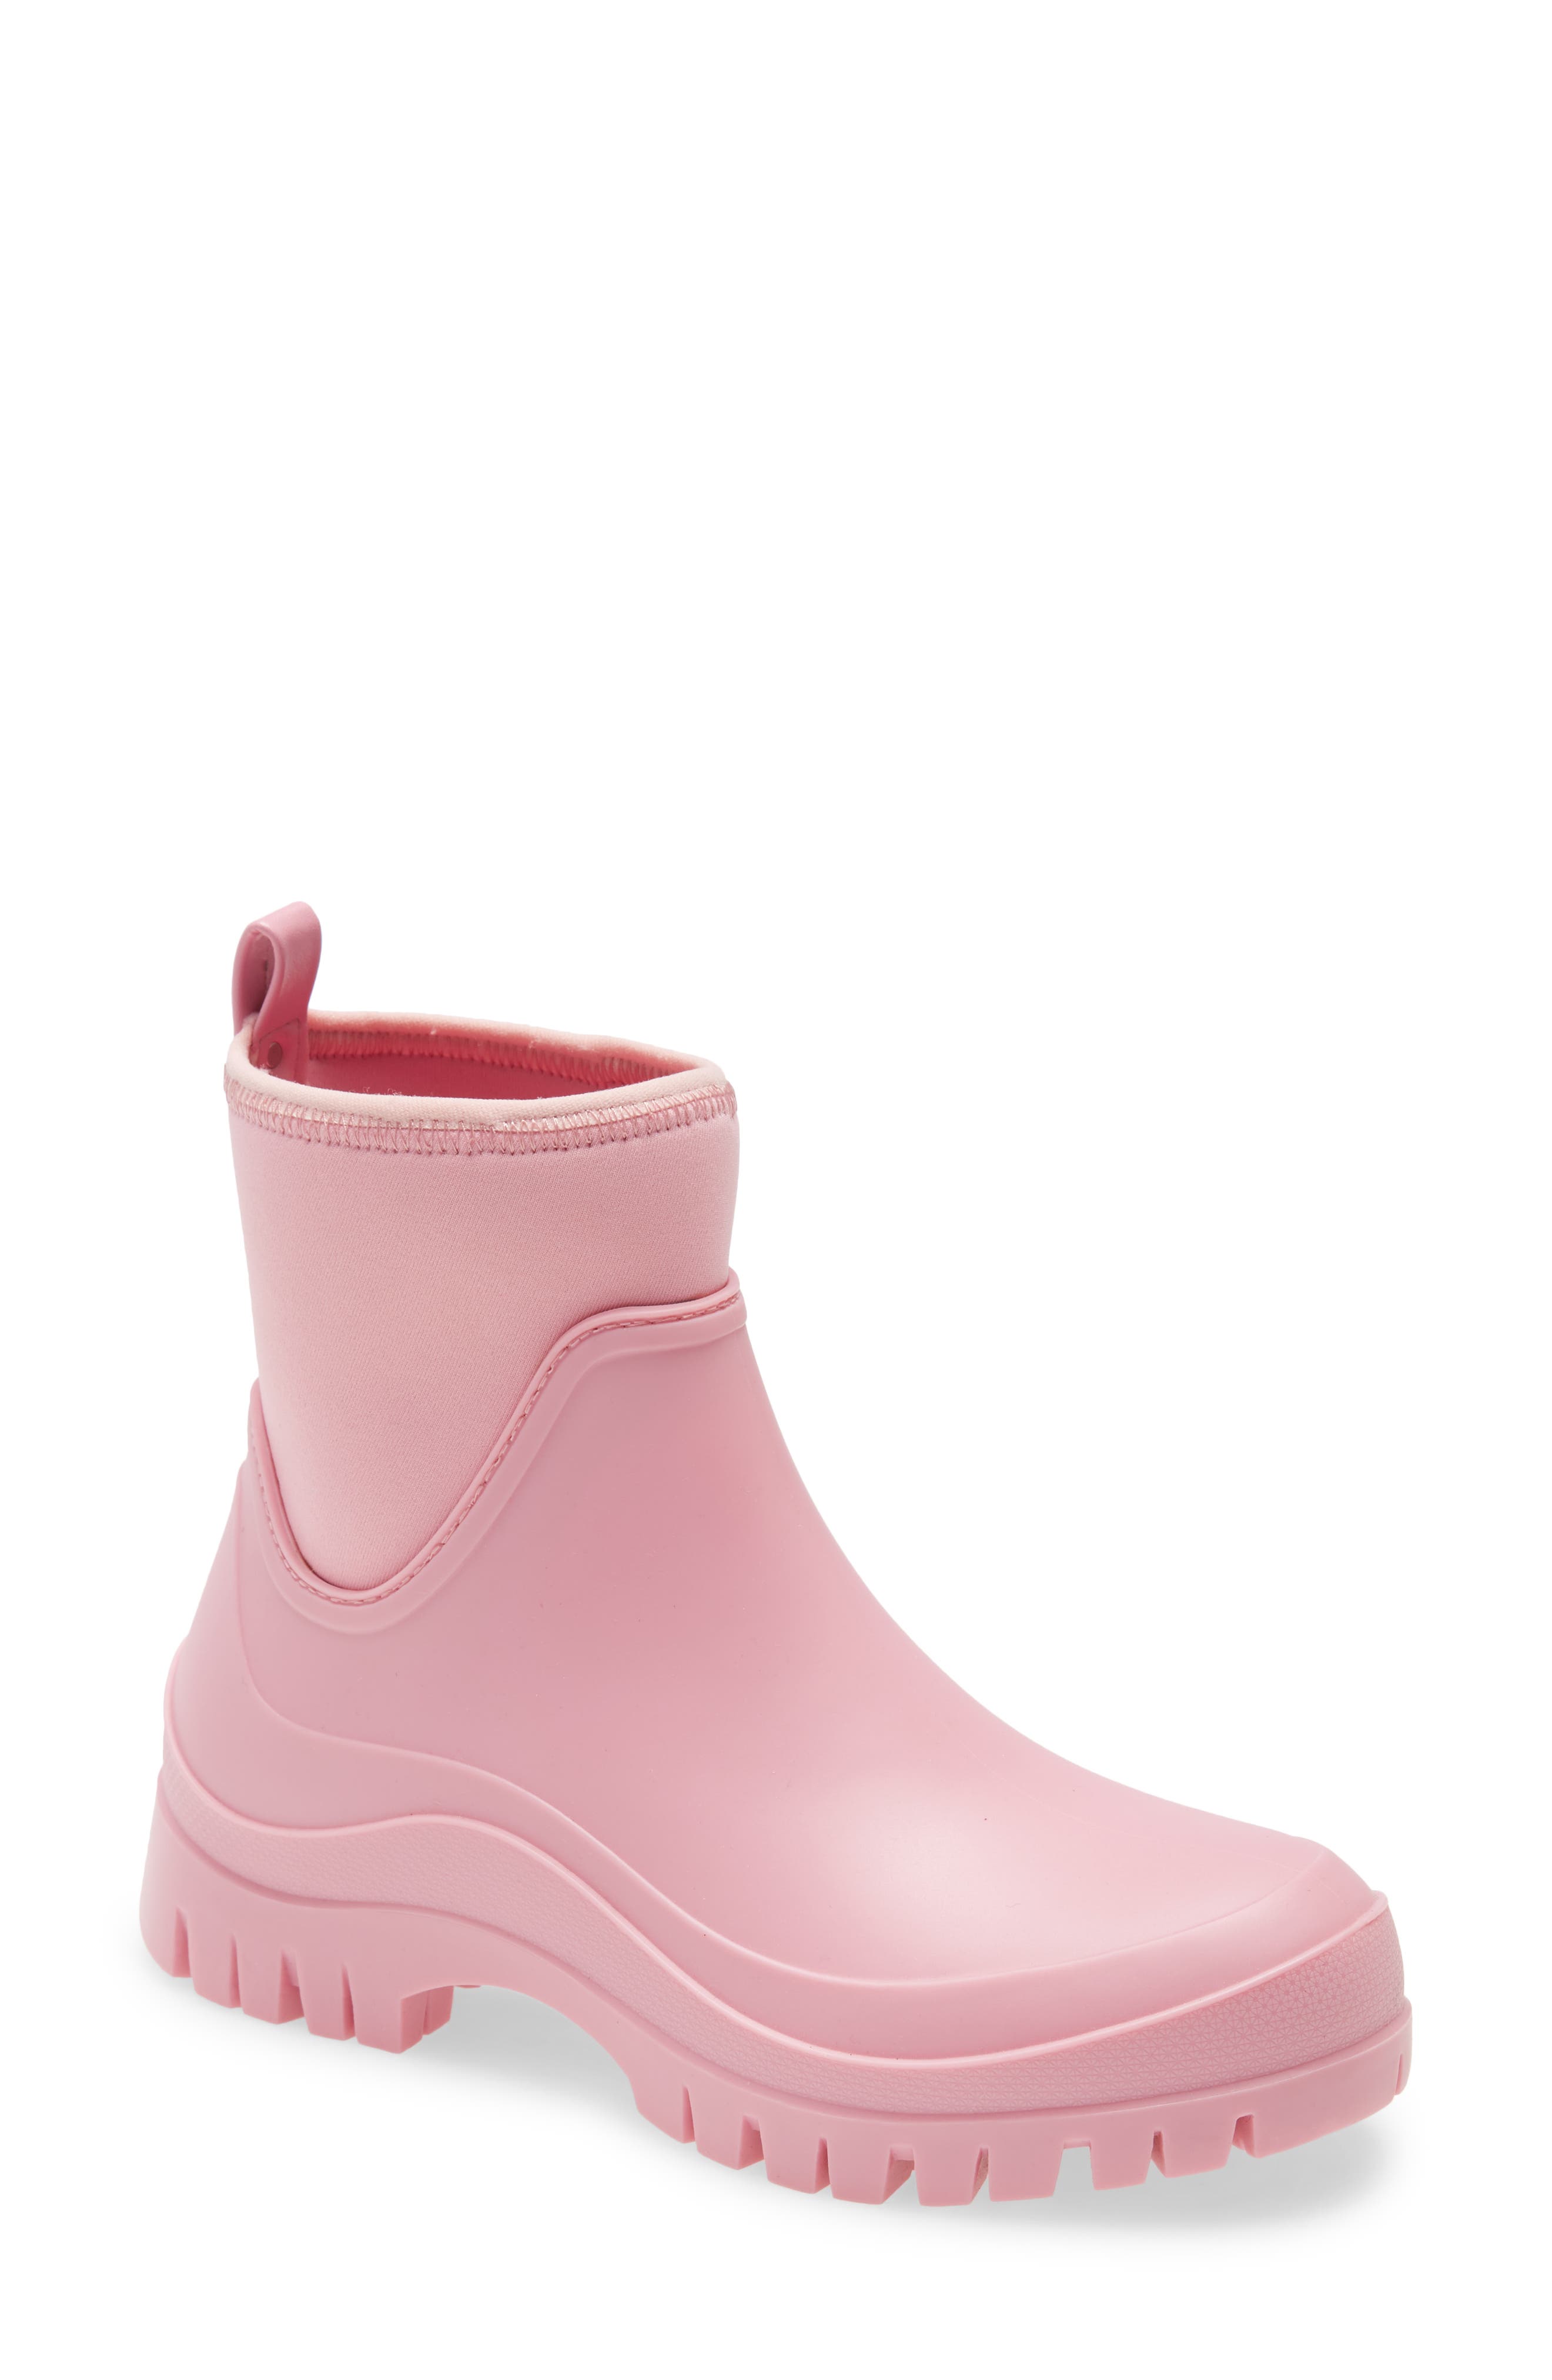 WOMEN FASHION Footwear Waterproof Boots Pink S Bimba&Lola boots discount 76% 